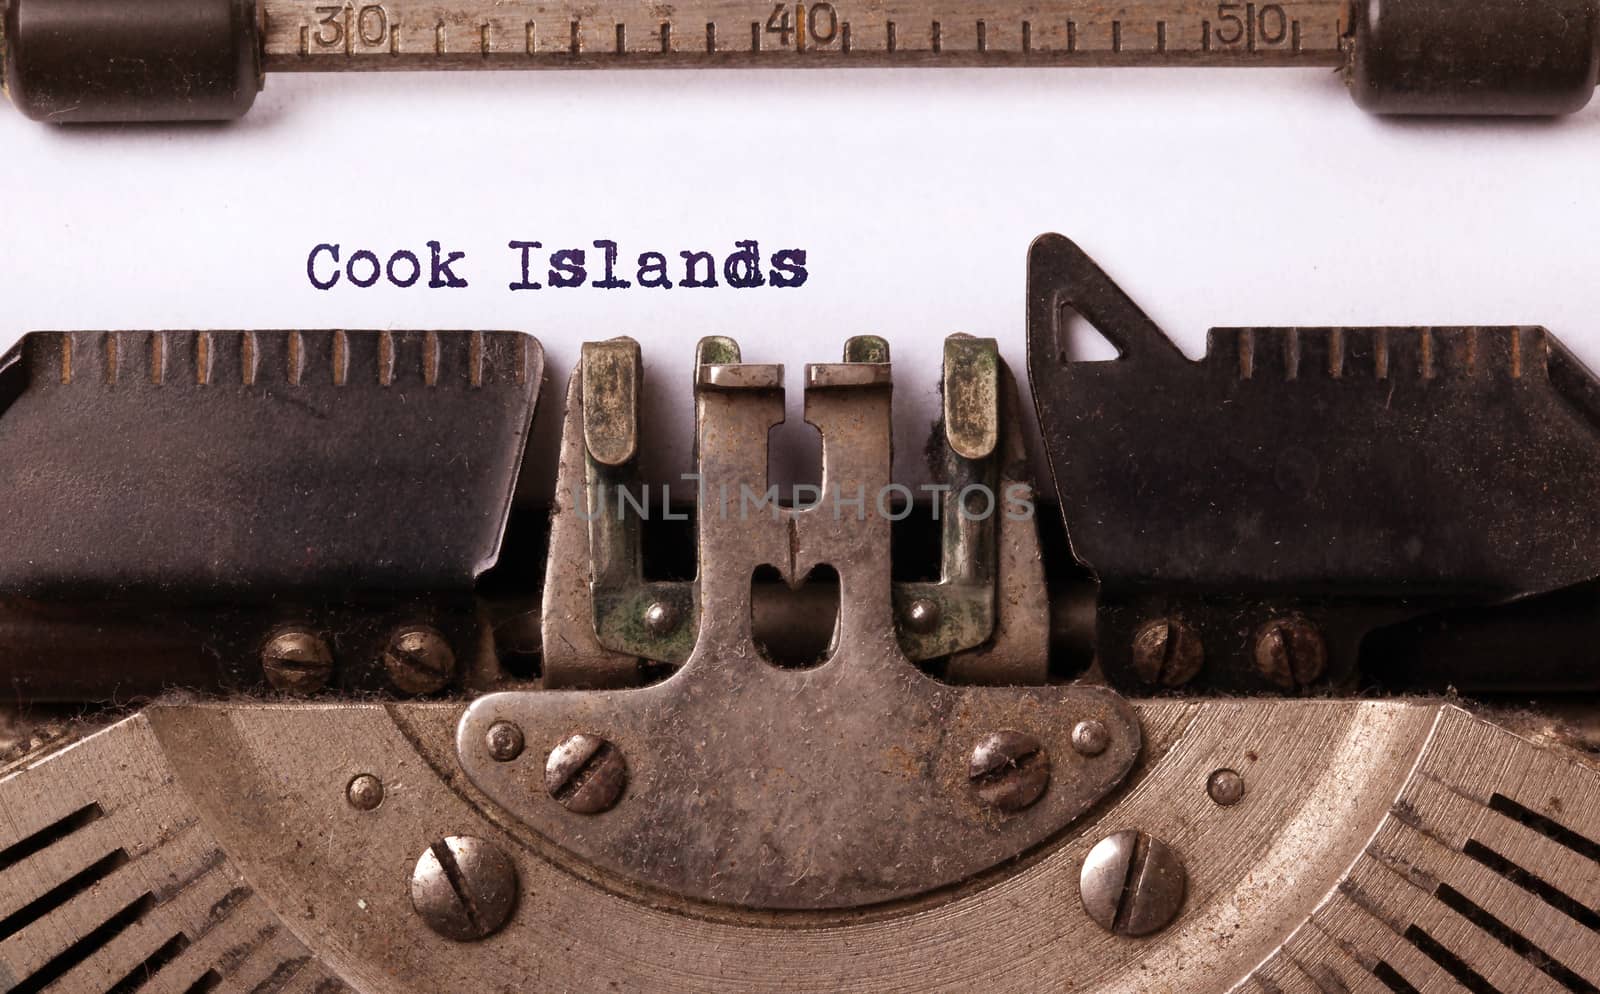 Old typewriter - Cook Islands by michaklootwijk